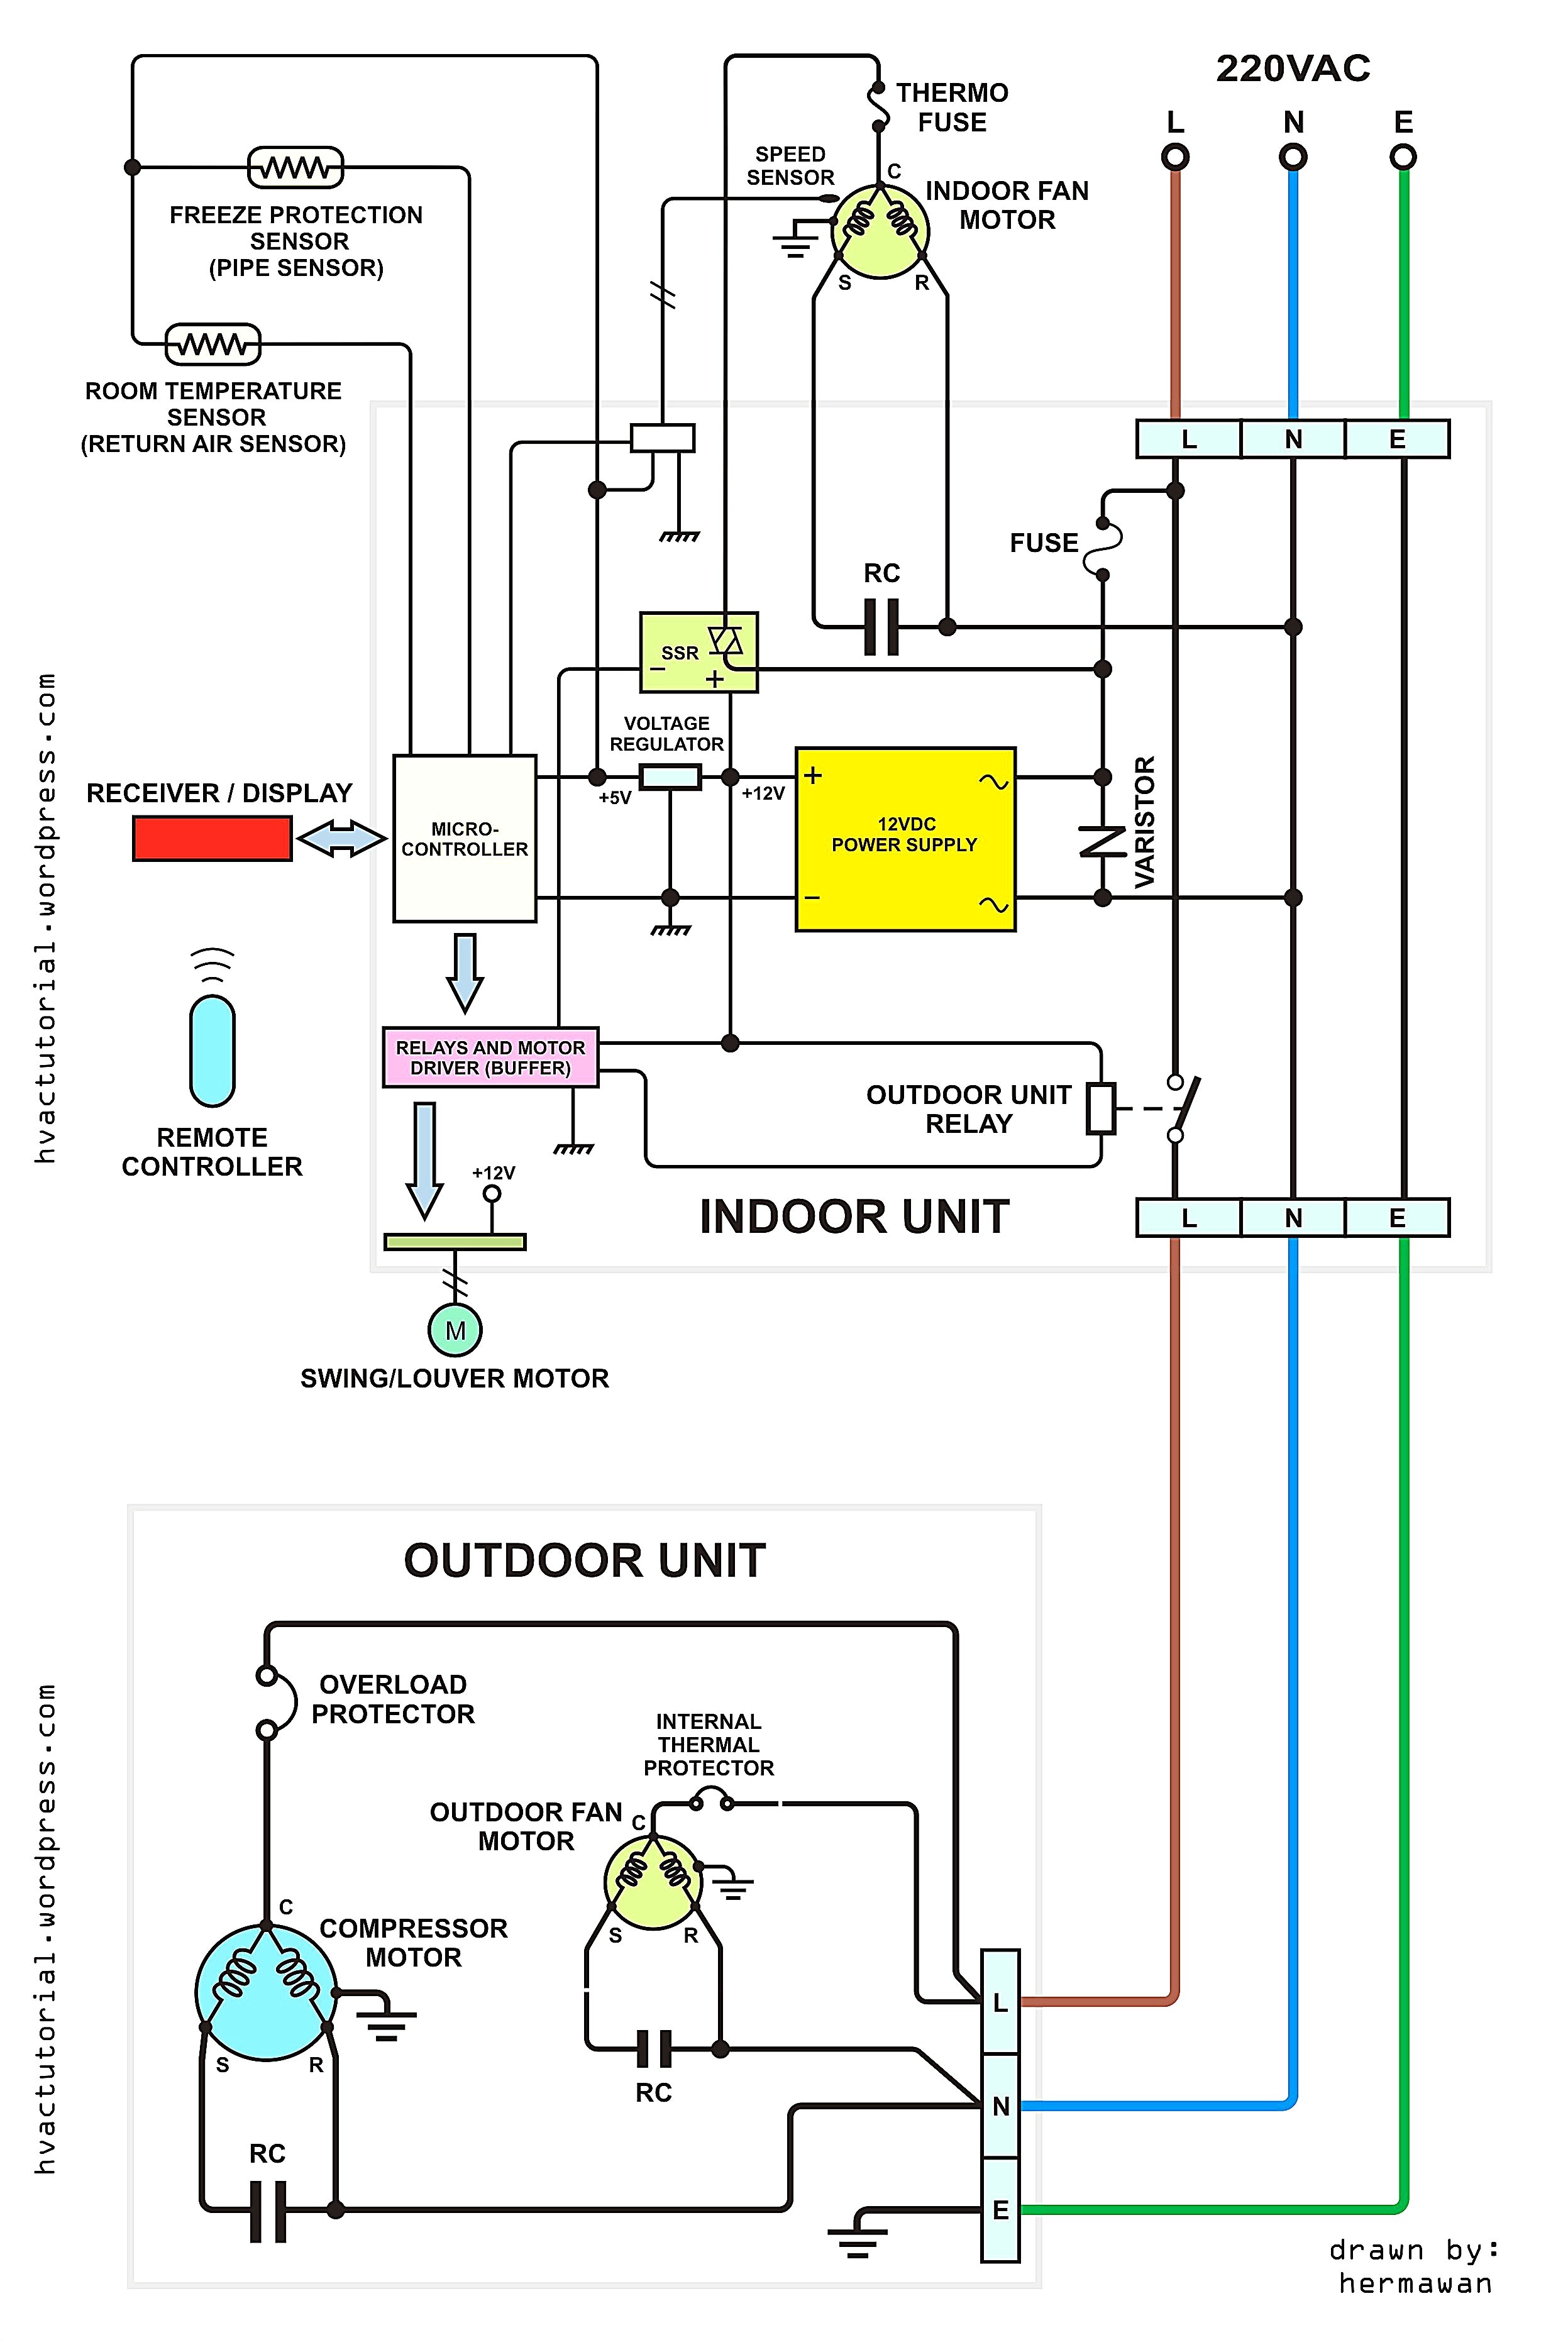 Carrier Air Conditioner Wiring Diagram Heat Pump thermostat Wiring Diagram Classy Shape Hvac why Does Wires Of Carrier Air Conditioner Wiring Diagram